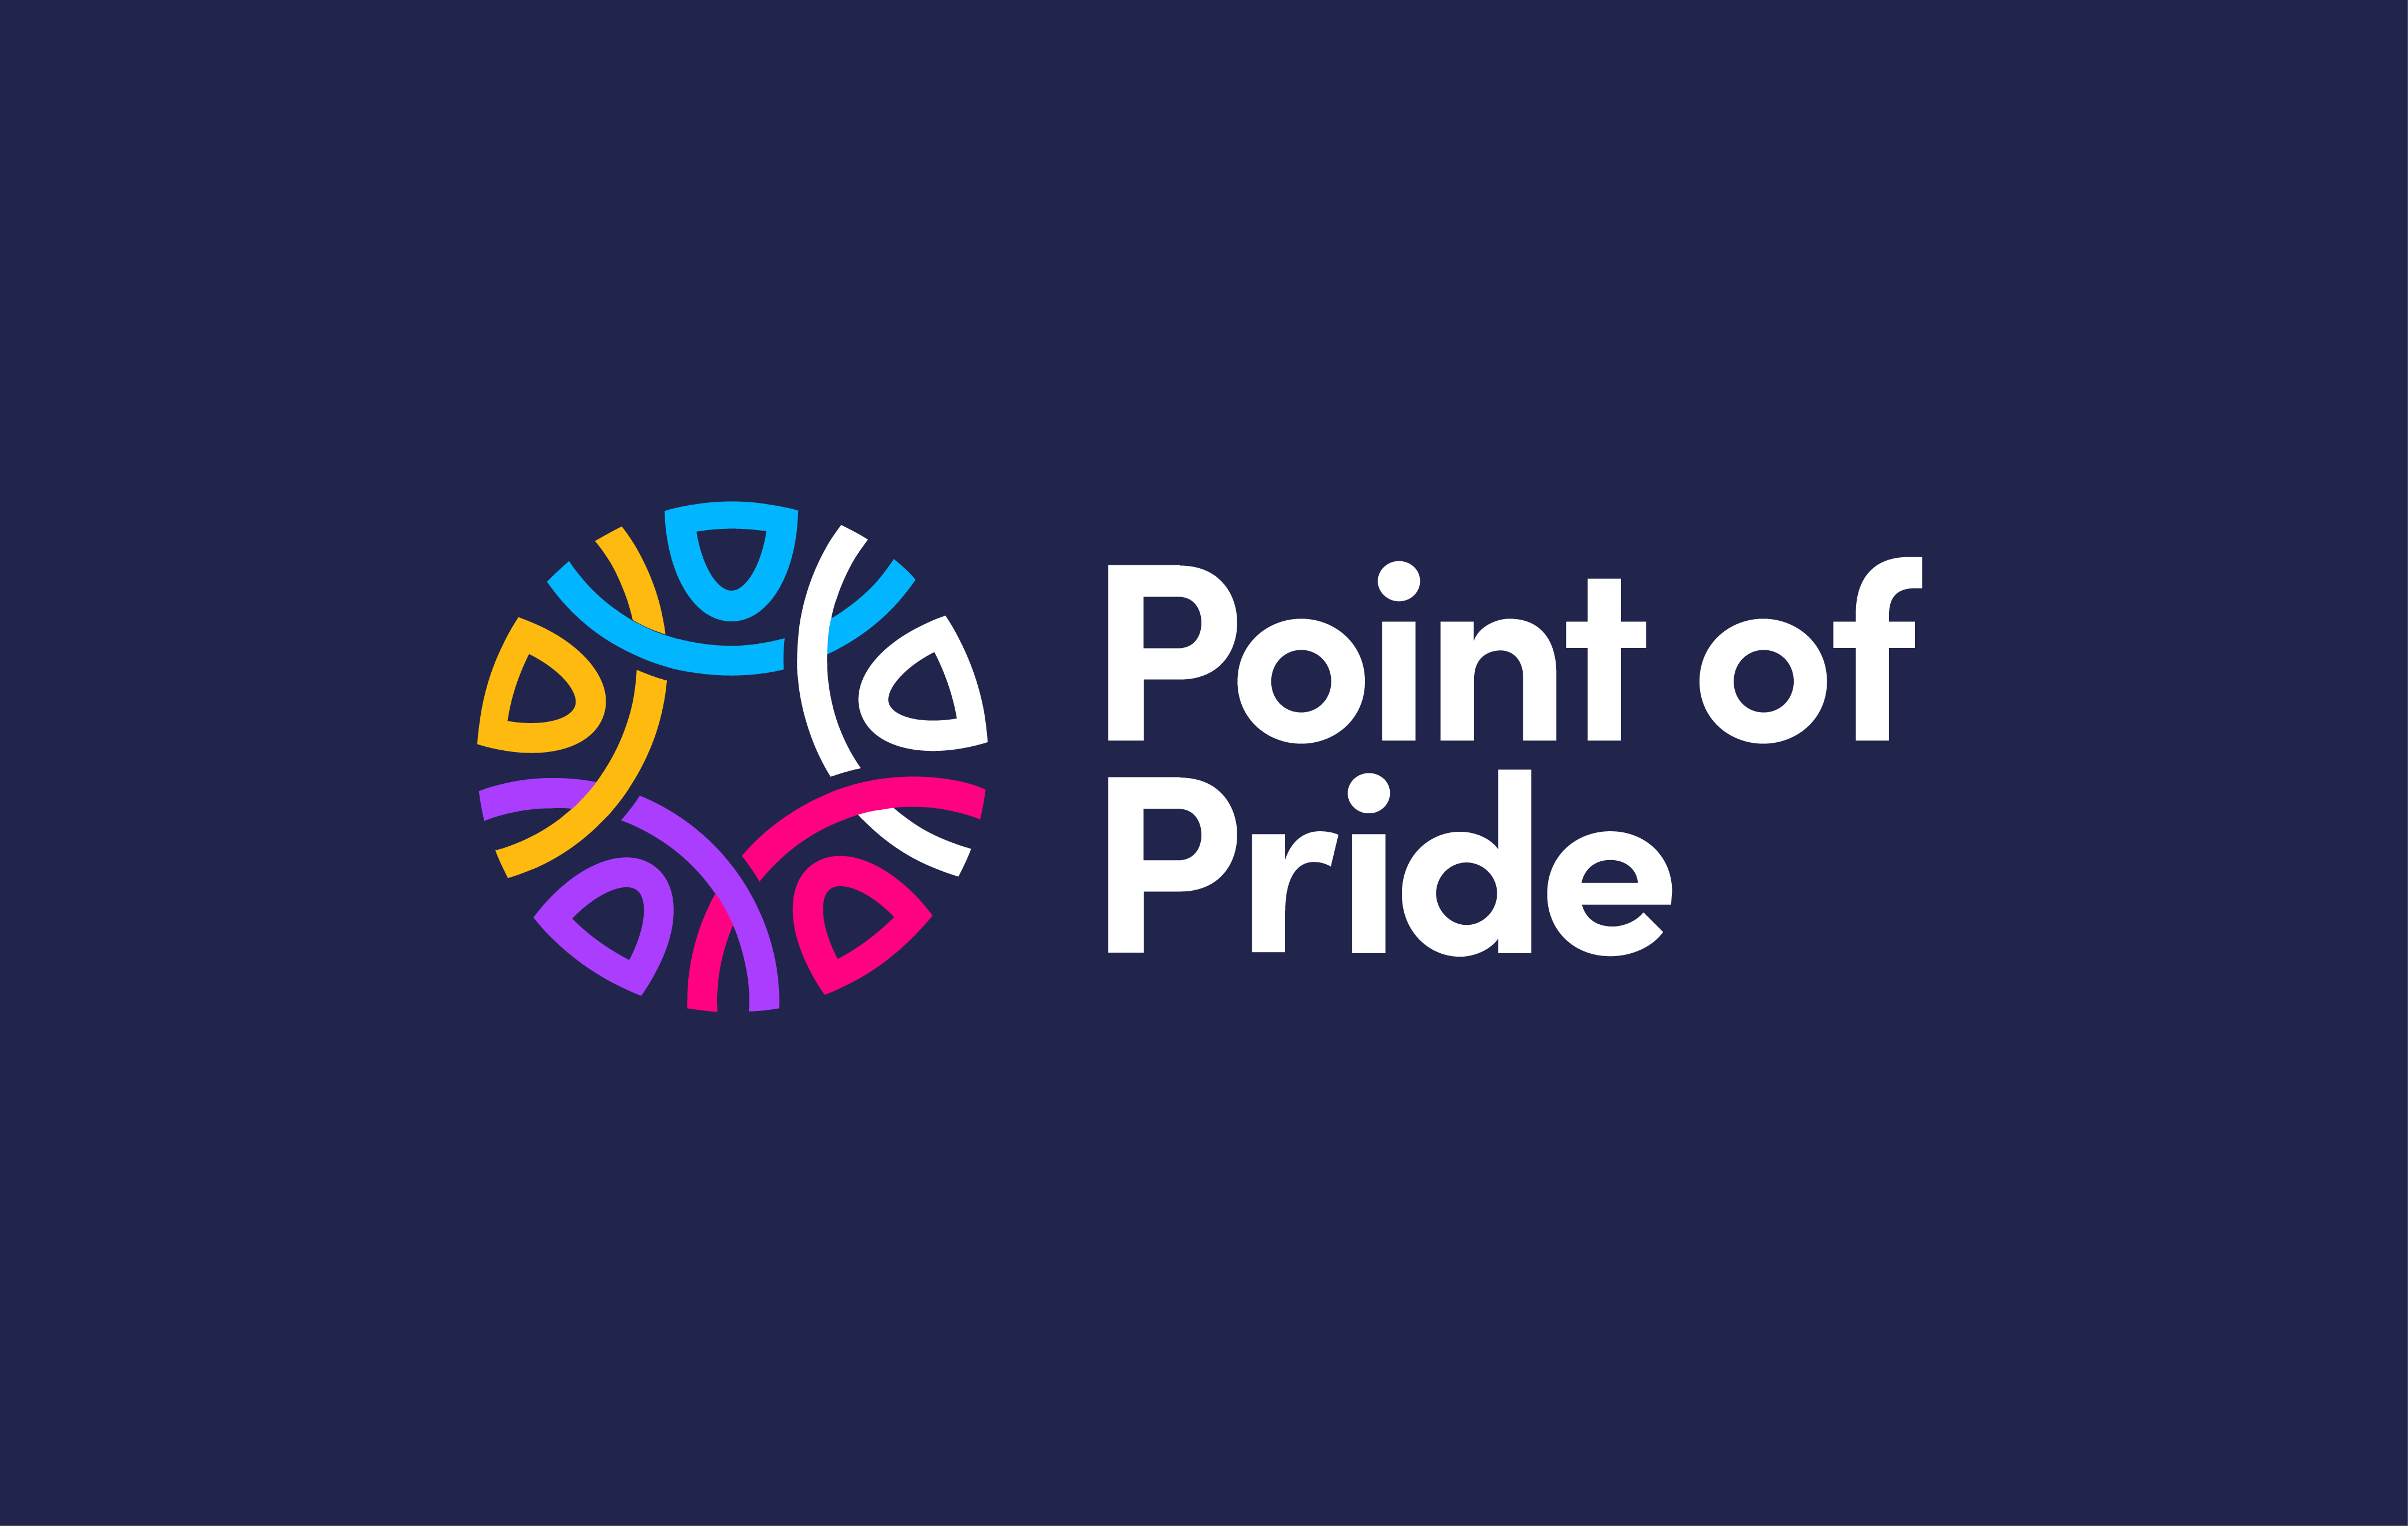 Point of Pride logo centered over a dark navy background.